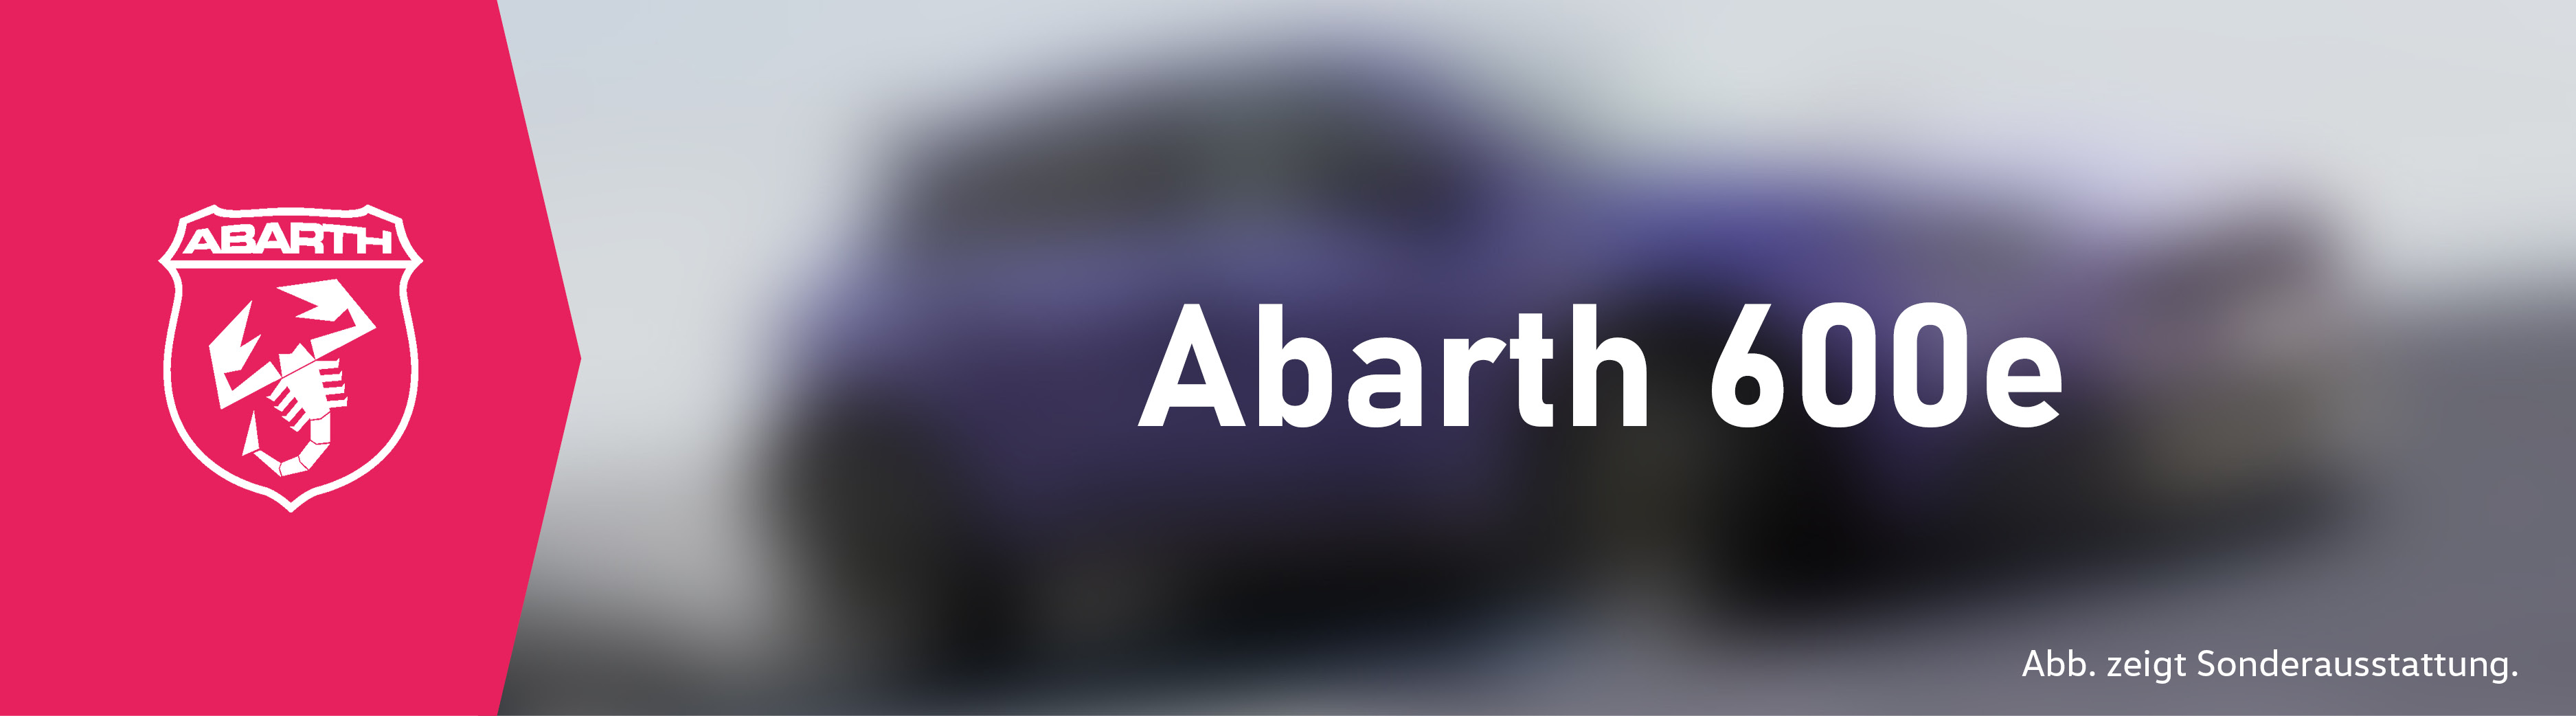 ABARTH 600e